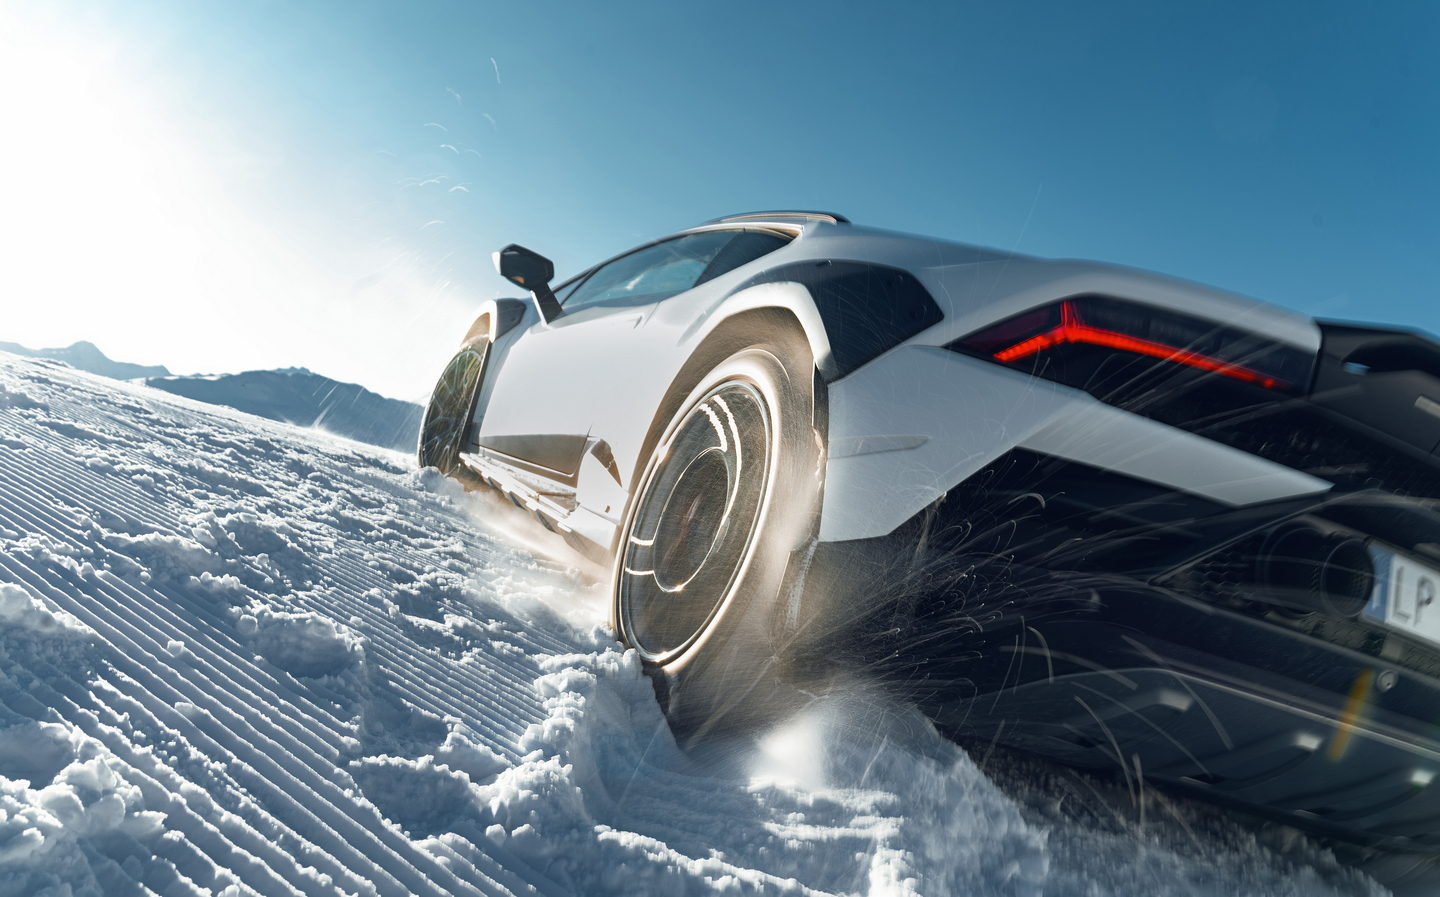 Watch Lamborghini Huracán Sterrato show off Rally mode on snow